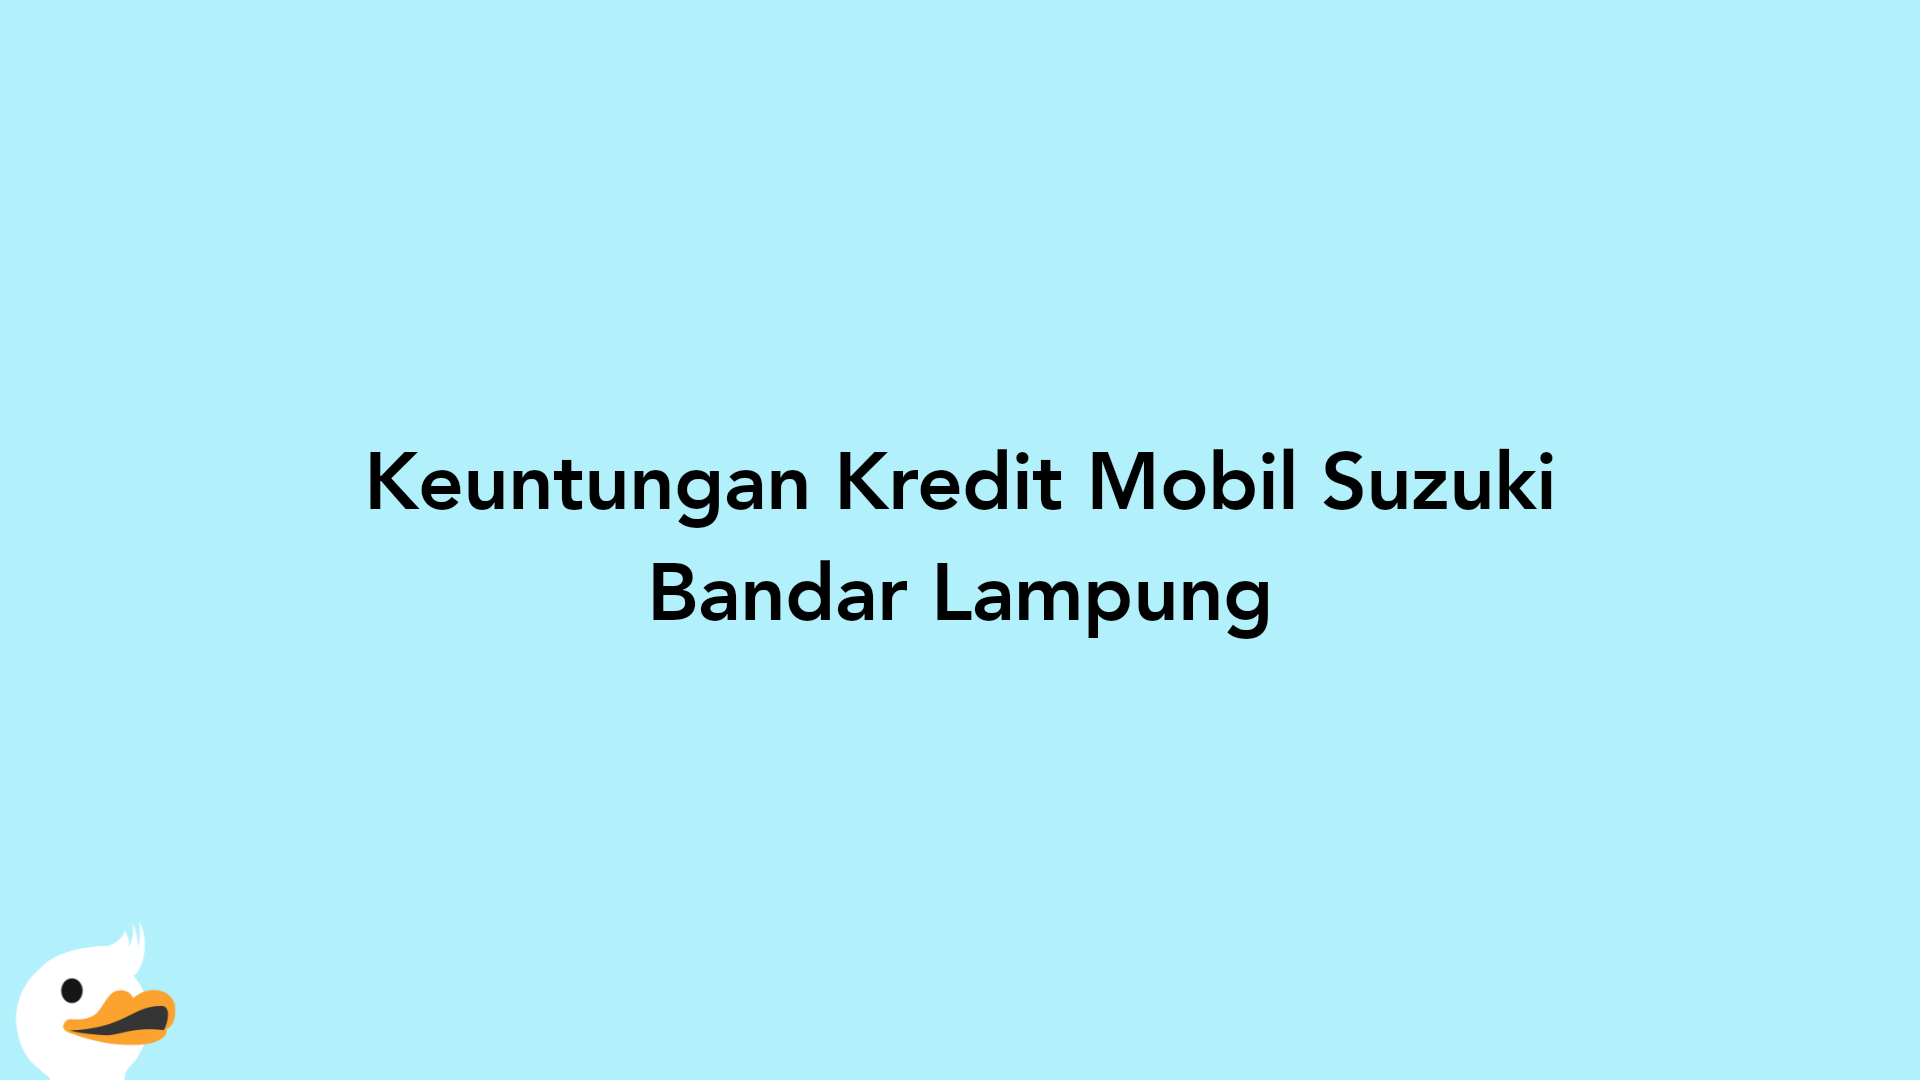 Keuntungan Kredit Mobil Suzuki Bandar Lampung